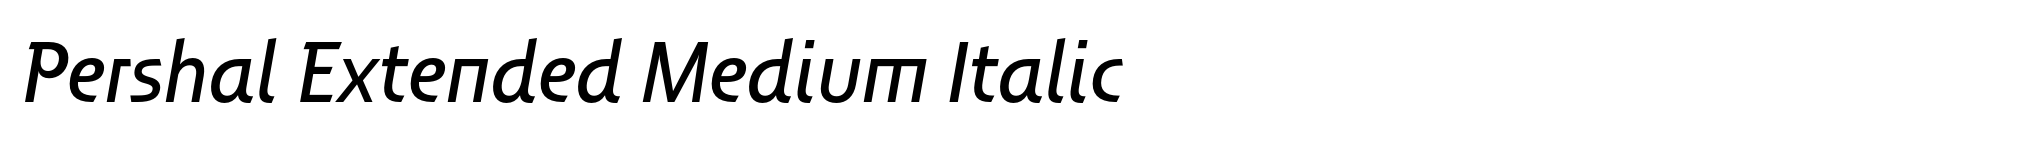 Pershal Extended Medium Italic image